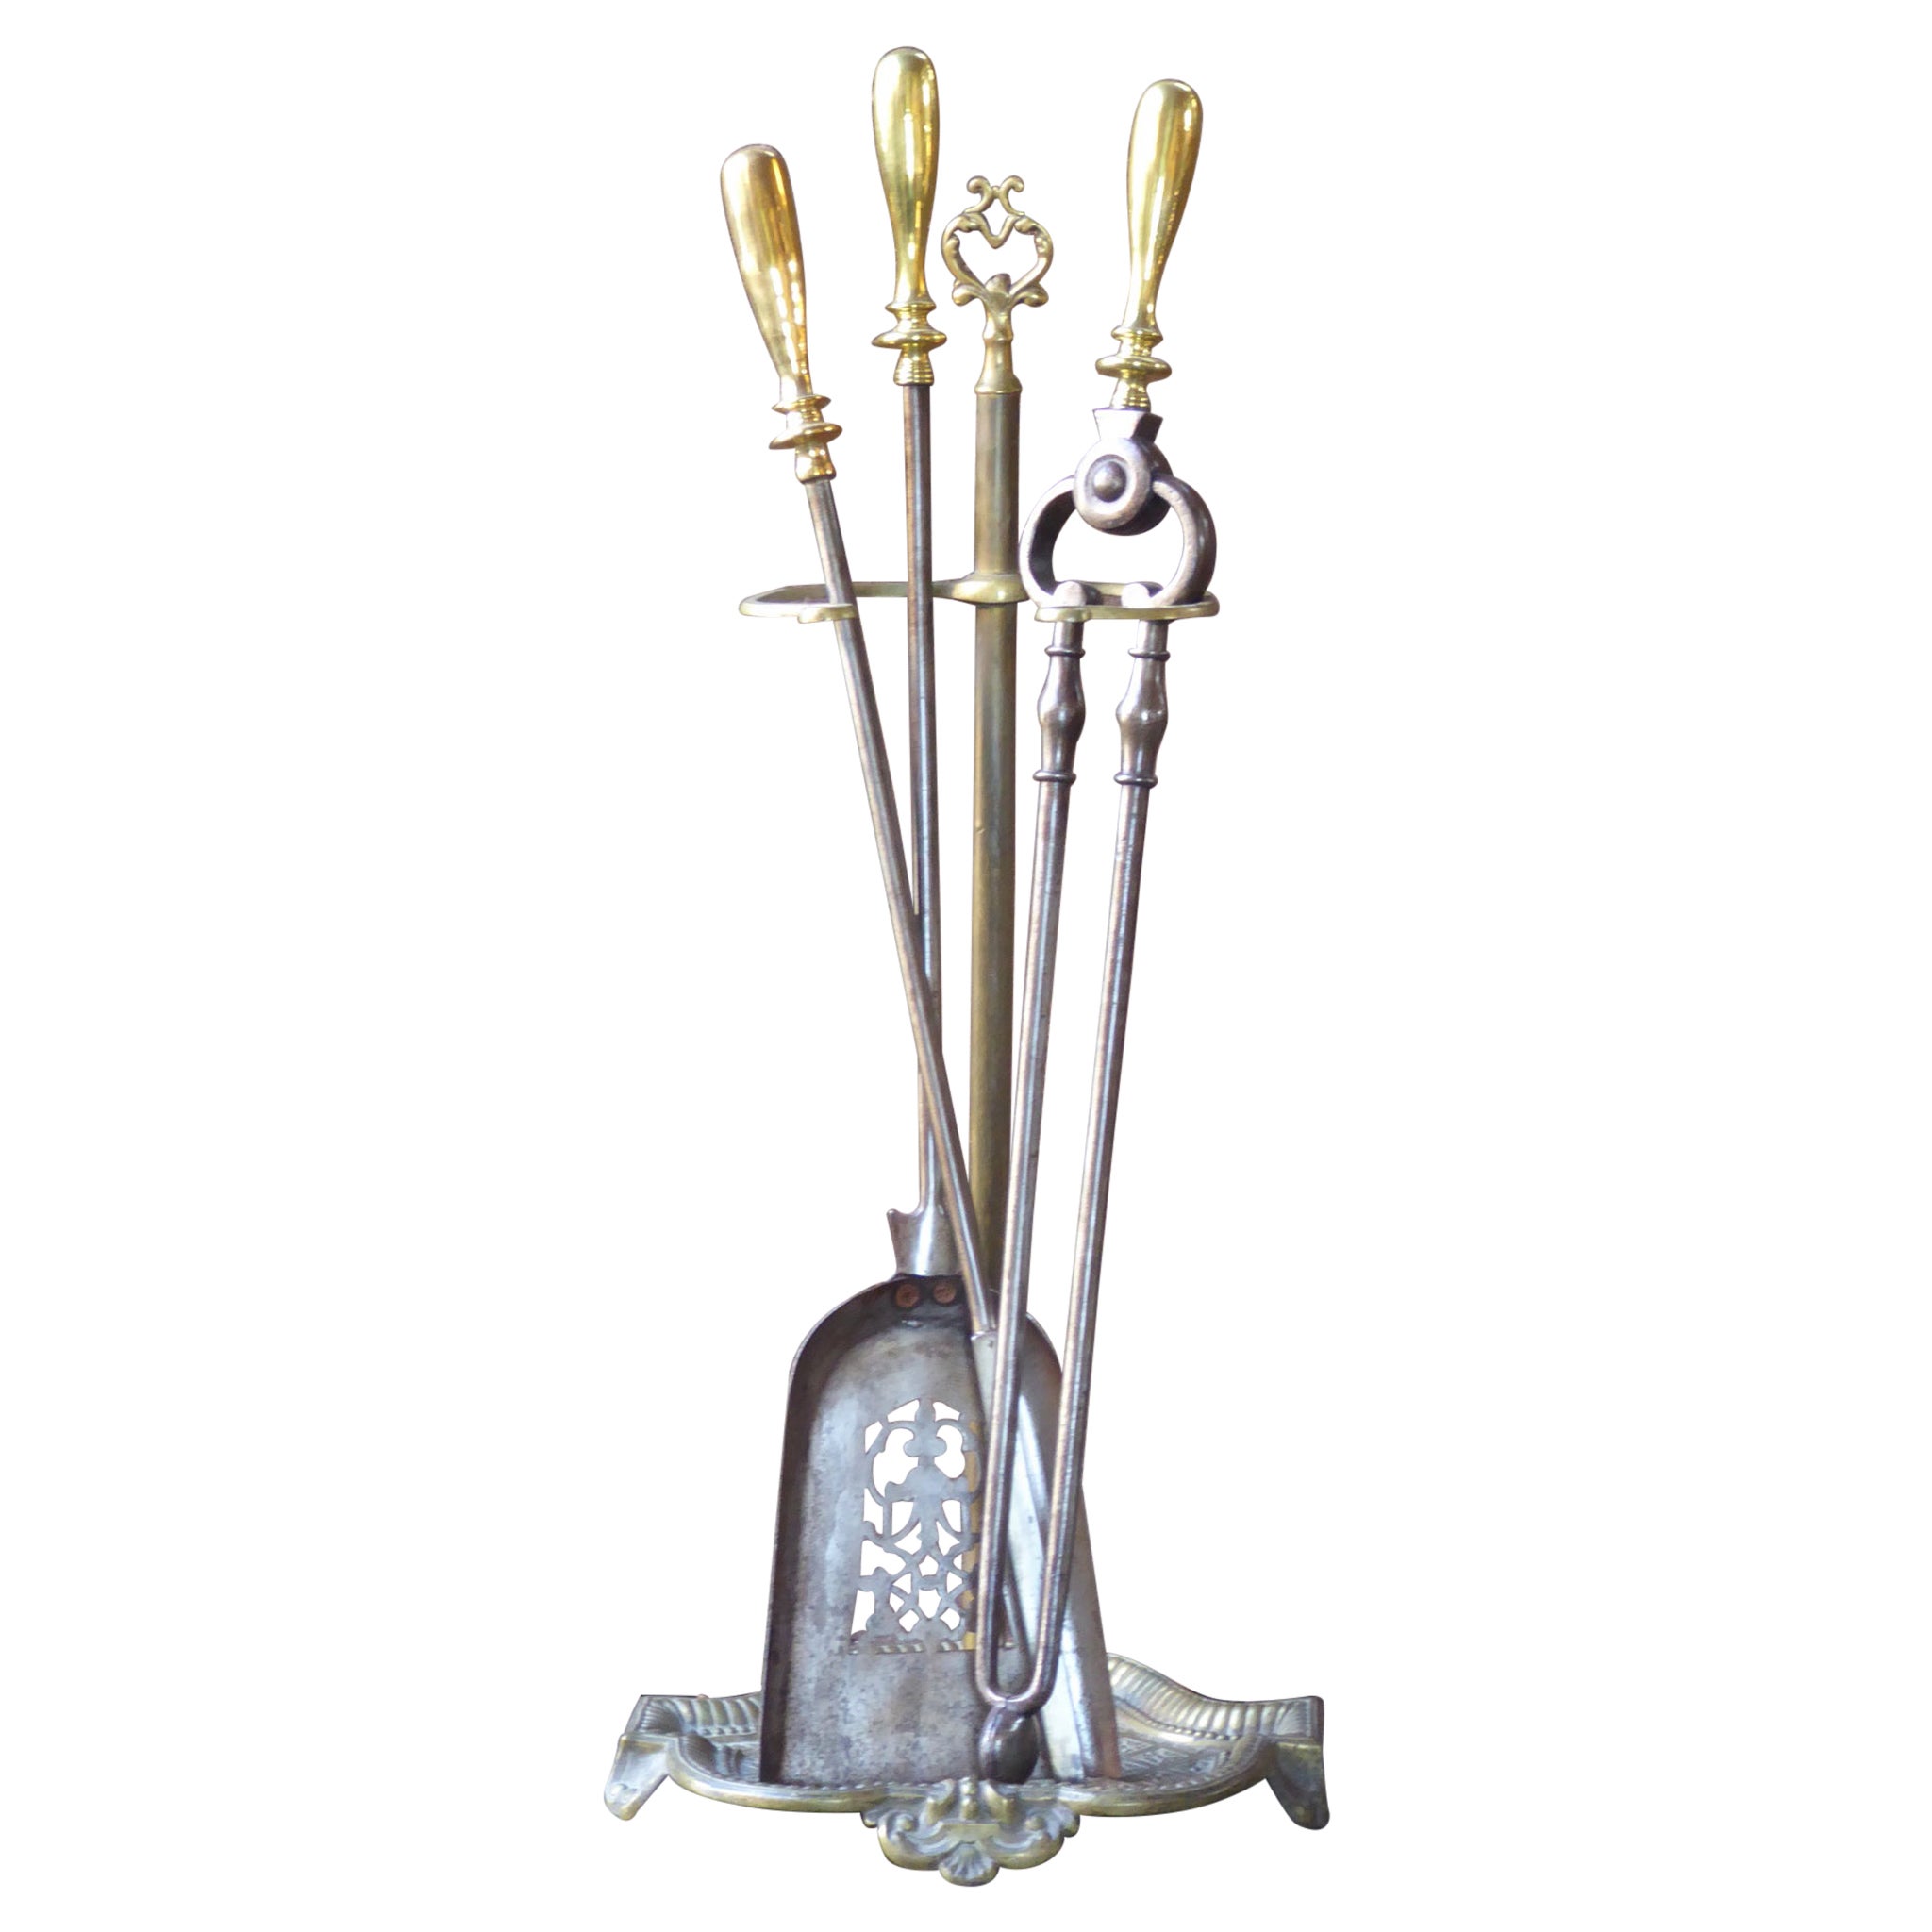 Georgian Fire Irons or Fireplace Tool Set, 18th-19th Century